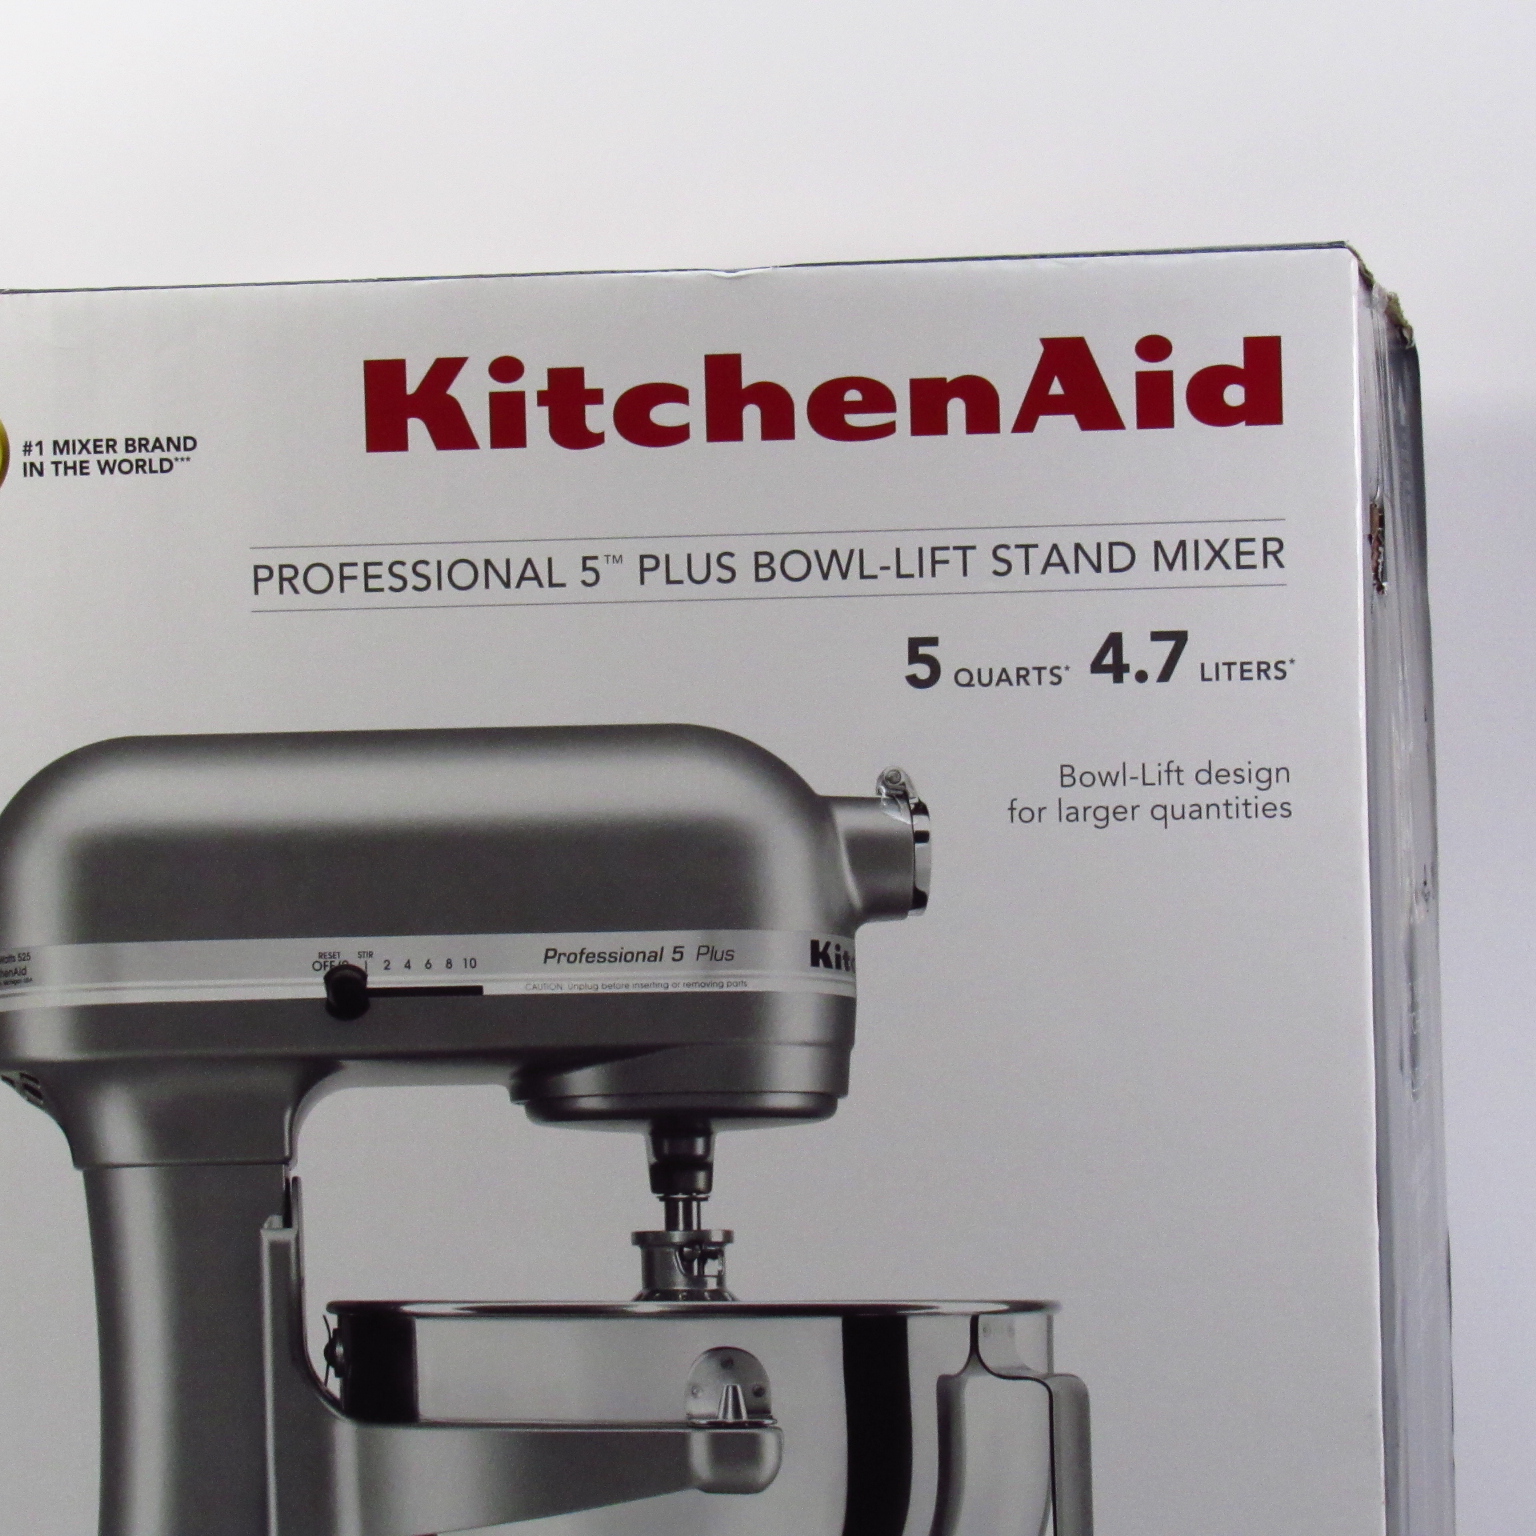 Kitchenaid professional 5 plus bowl lift stand mixer